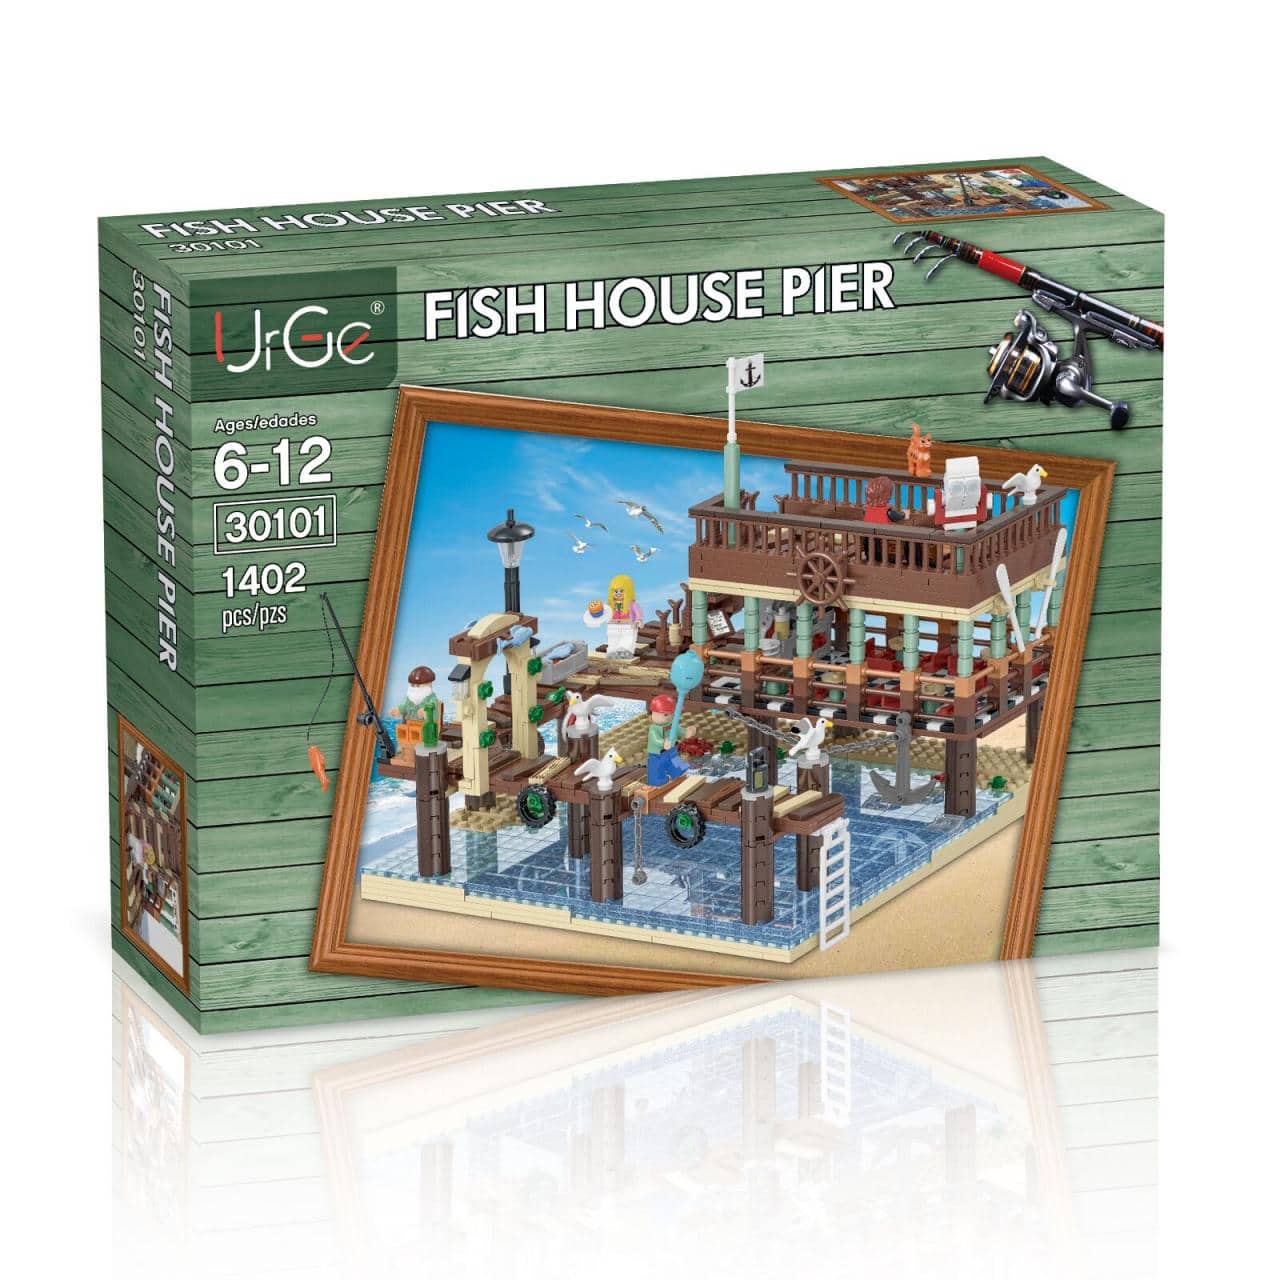 urge ug 30101 fish house pier 5145 - MOULD KING